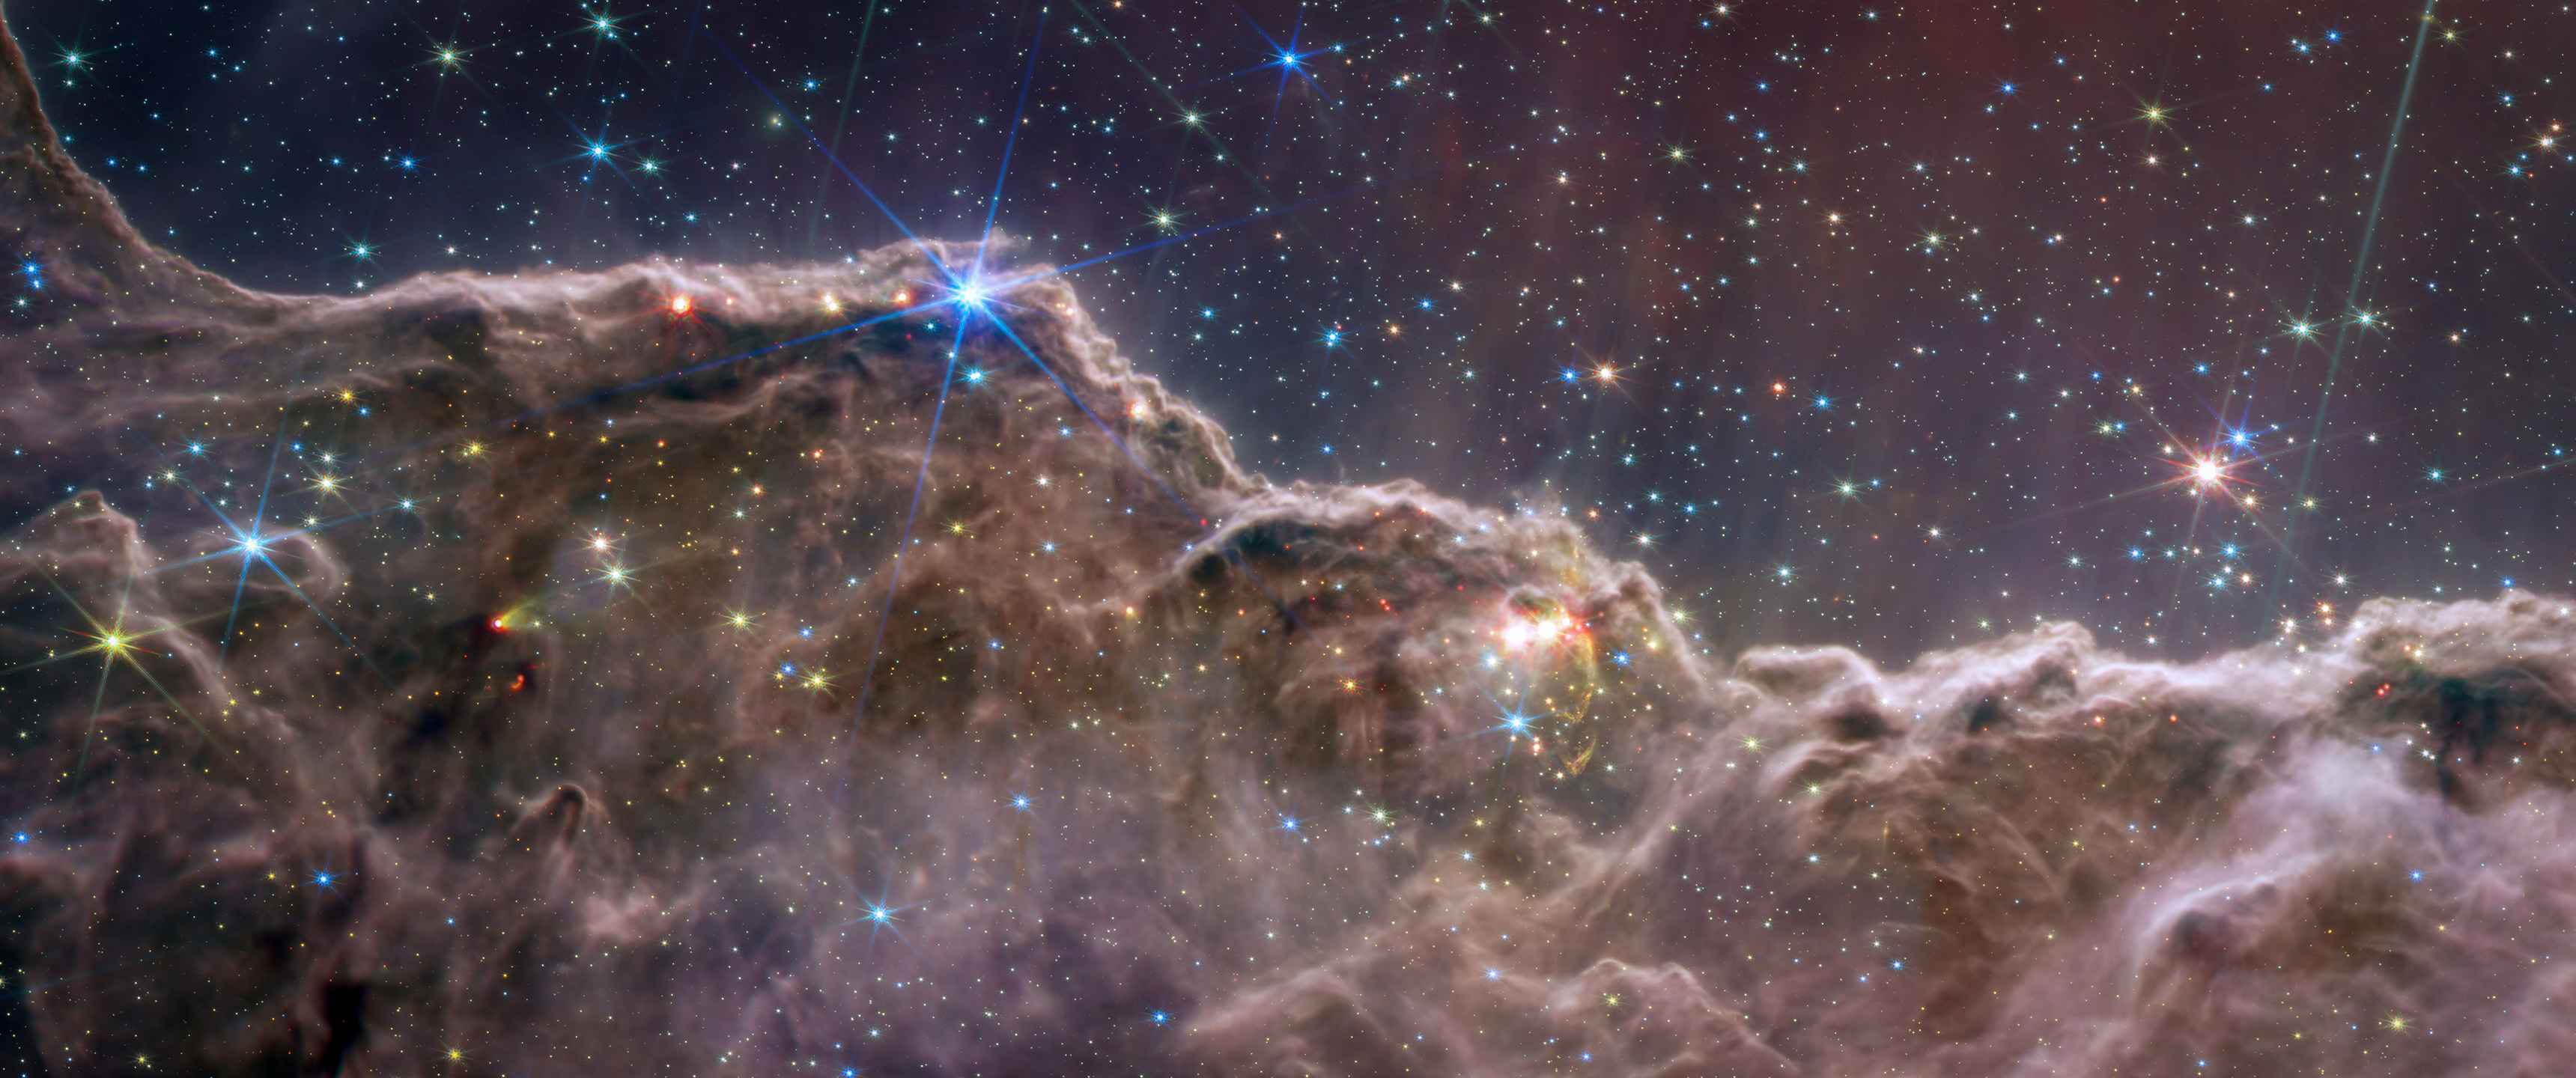 General 3440x1440 NASA ESA James Webb Space Telescope stars starry night infrared Carina Nebula NGC 3324